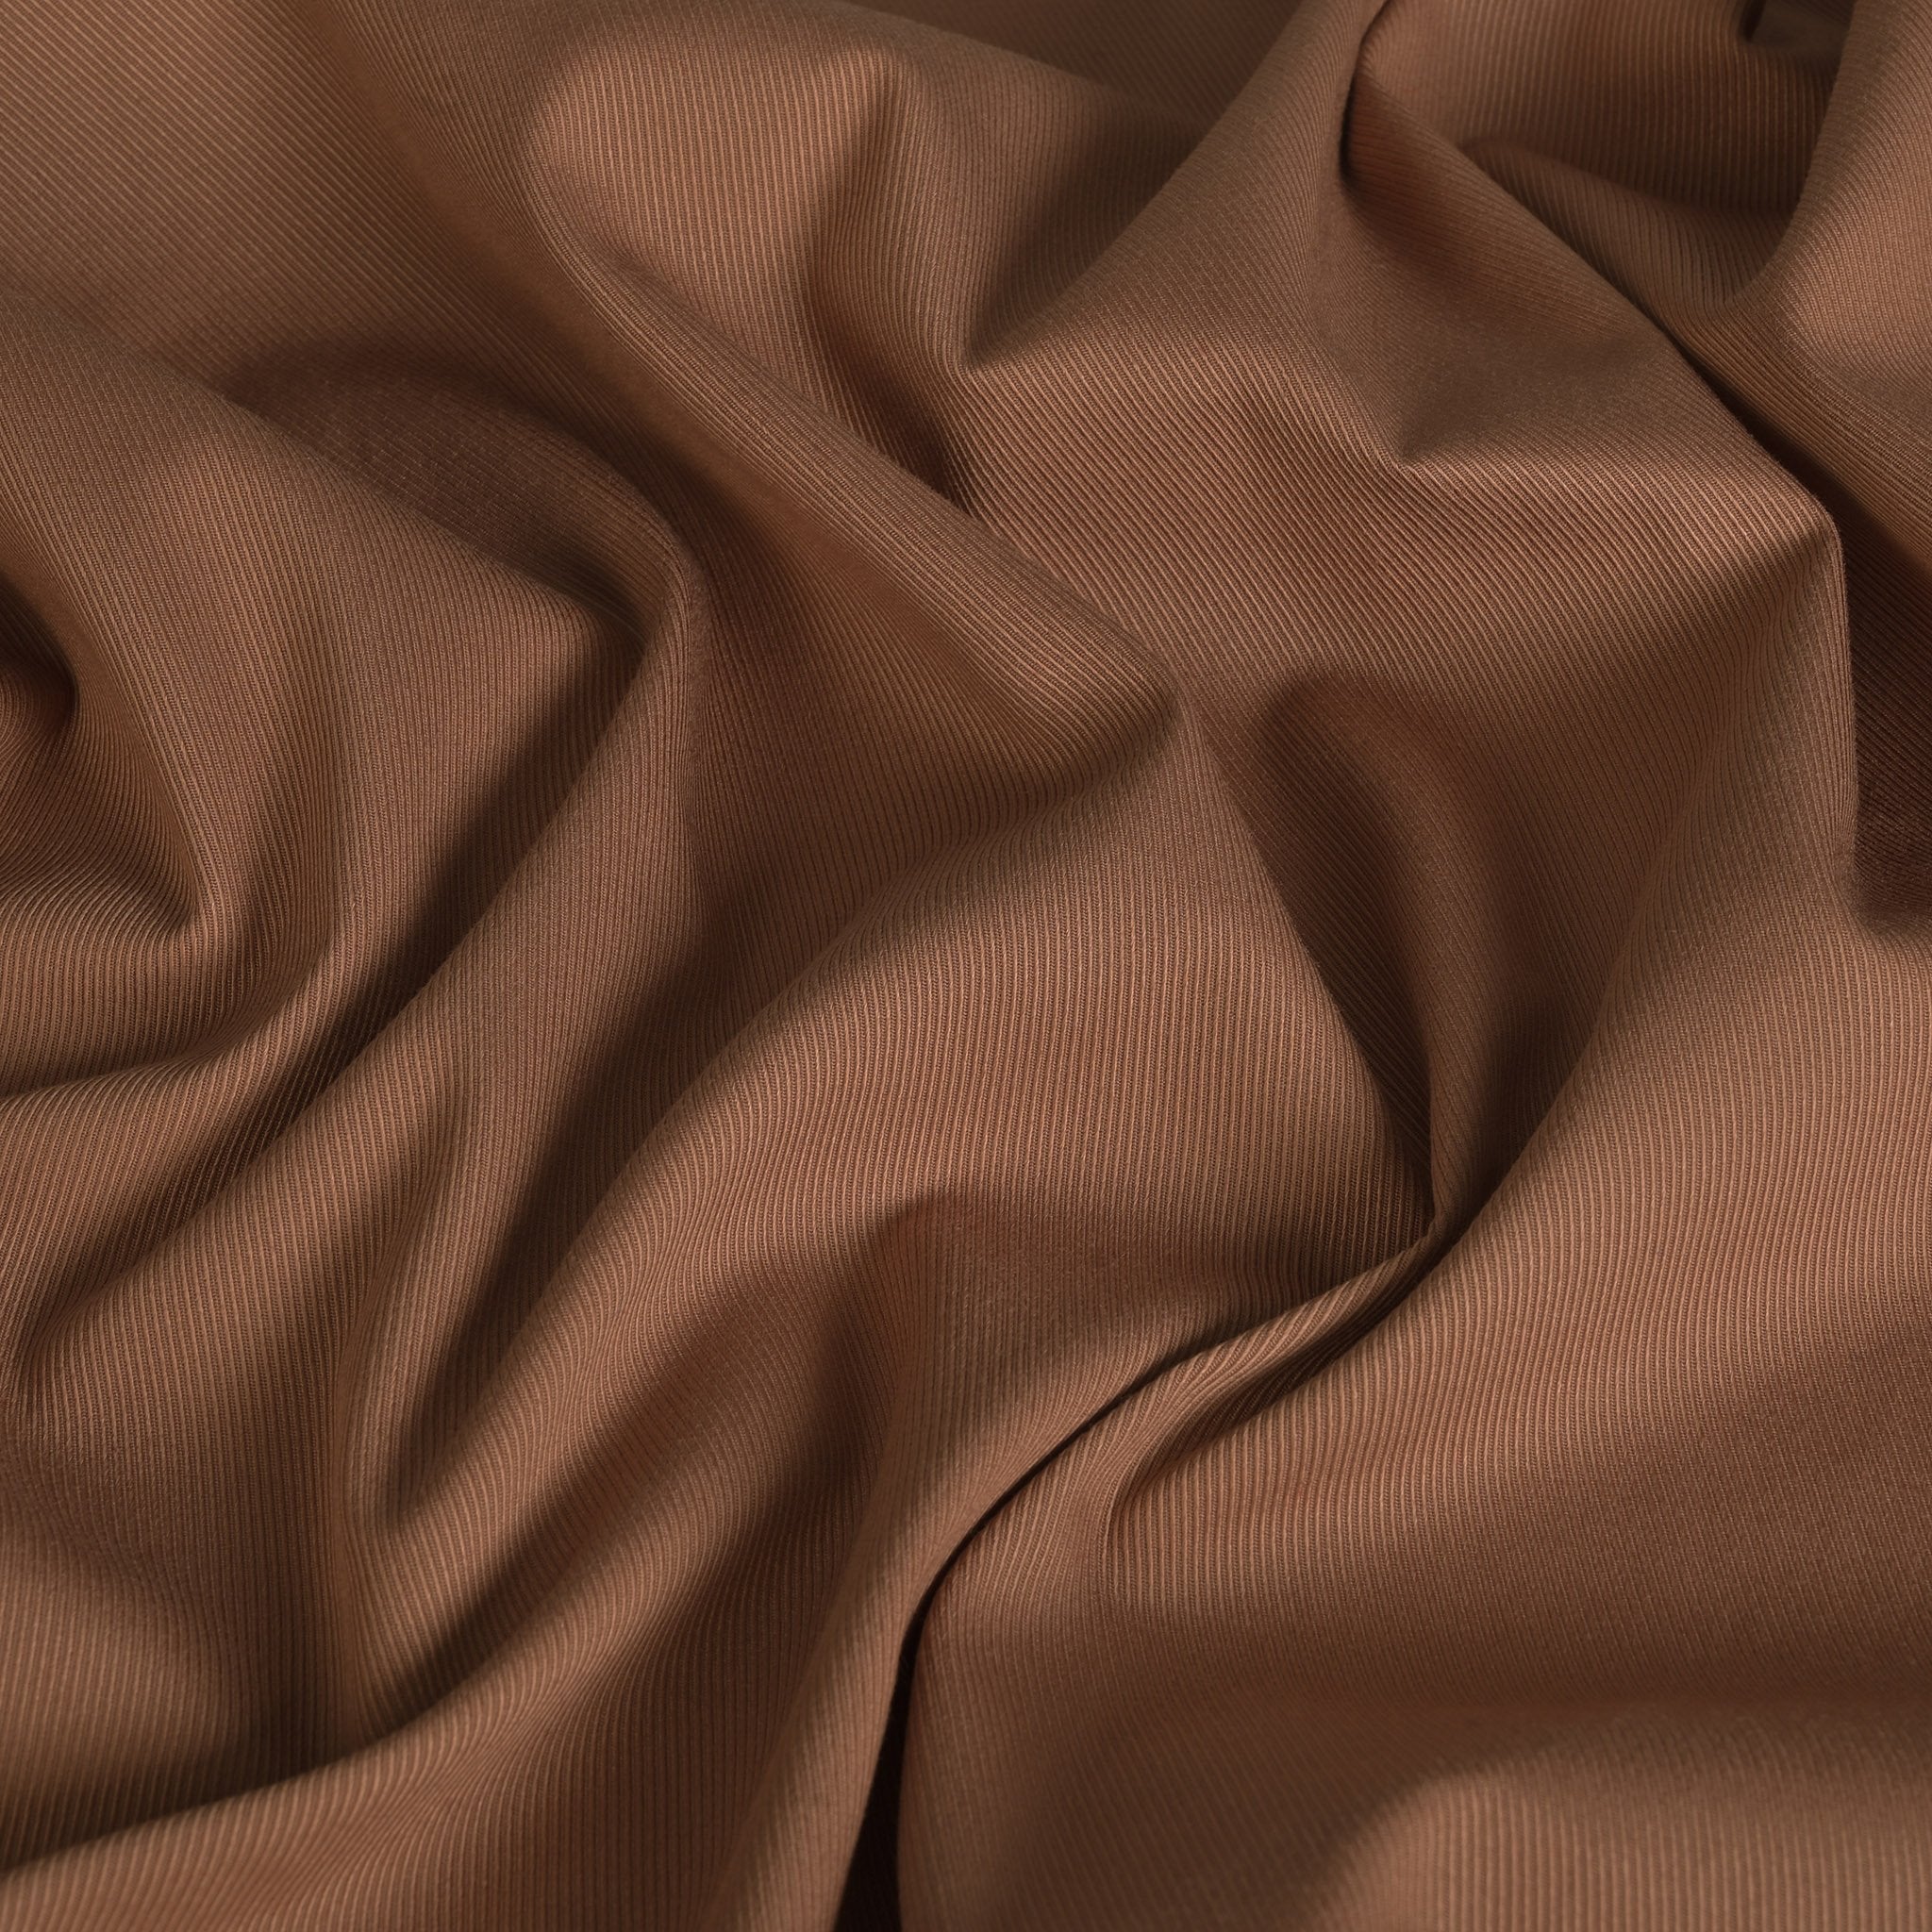 Brown Stretchy Twill Fabric 5688